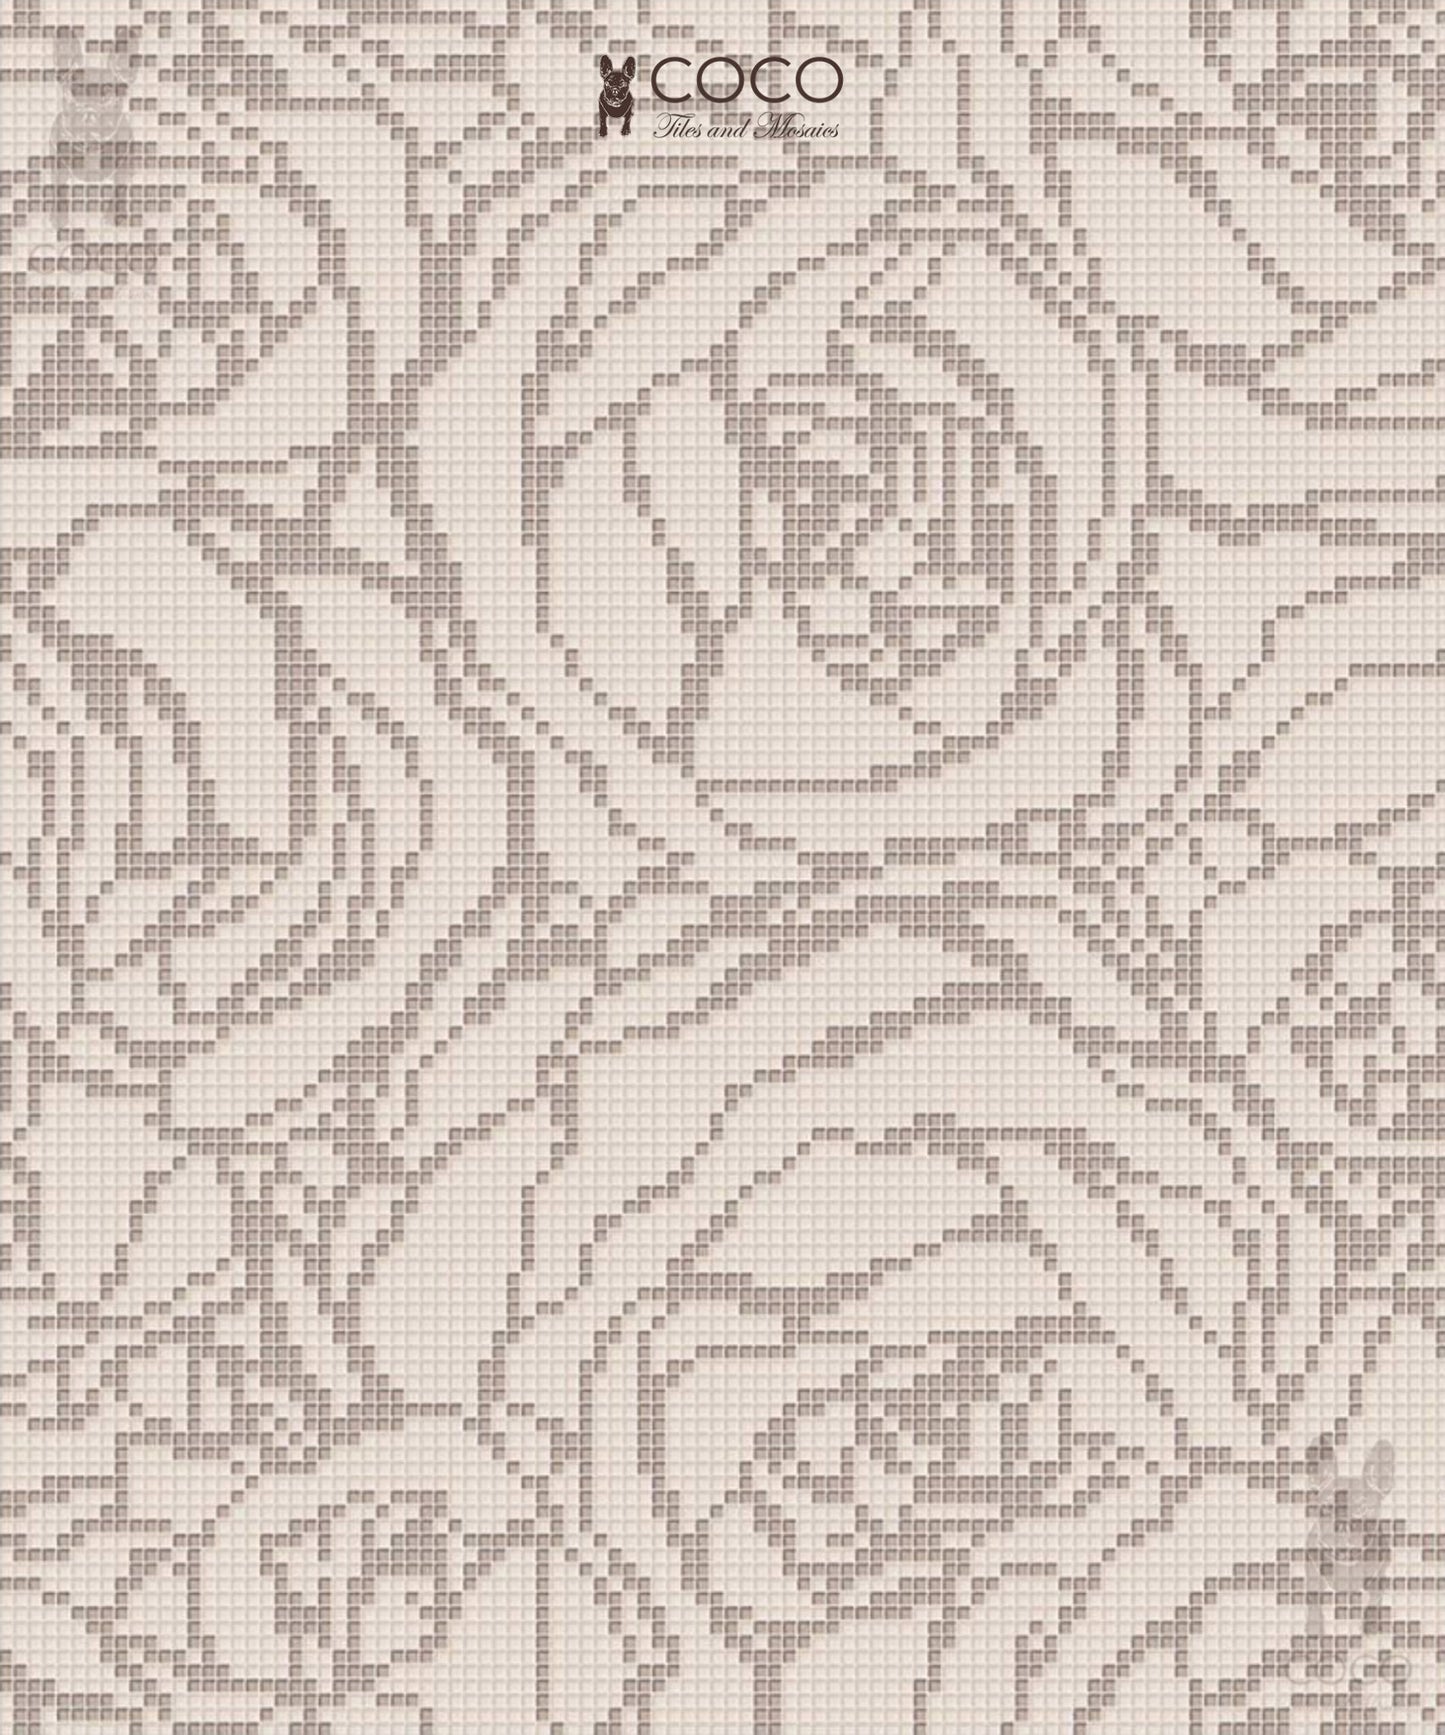 Artistic Mosaic - Wall of Flower - Elegance